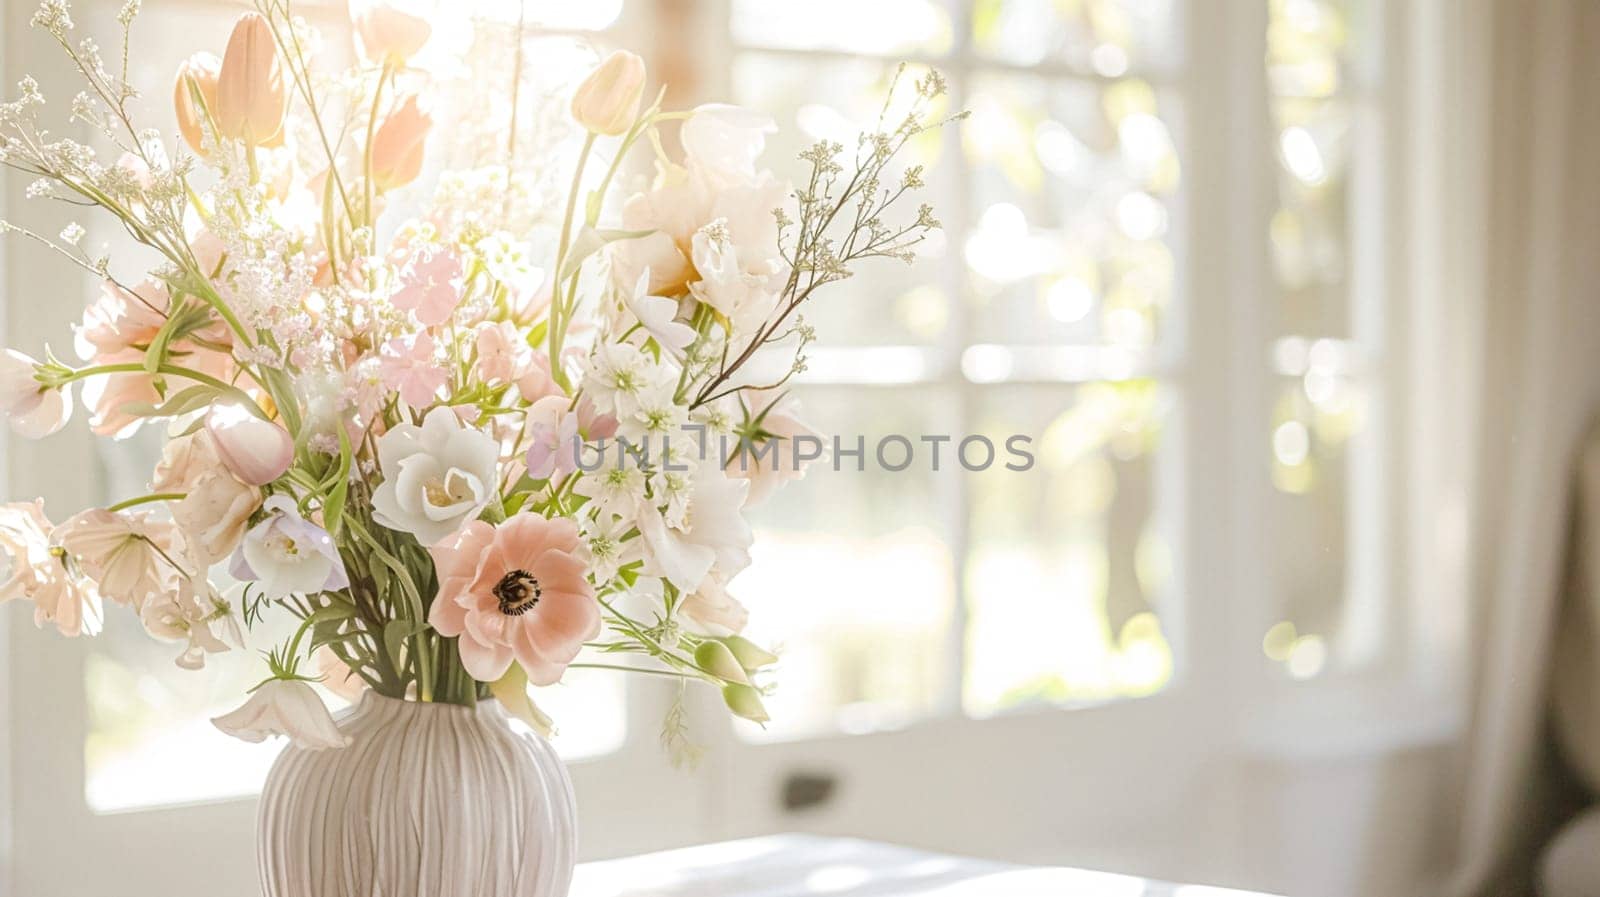 Beautiful bouquet of flowers in a vase. Floral arrangement